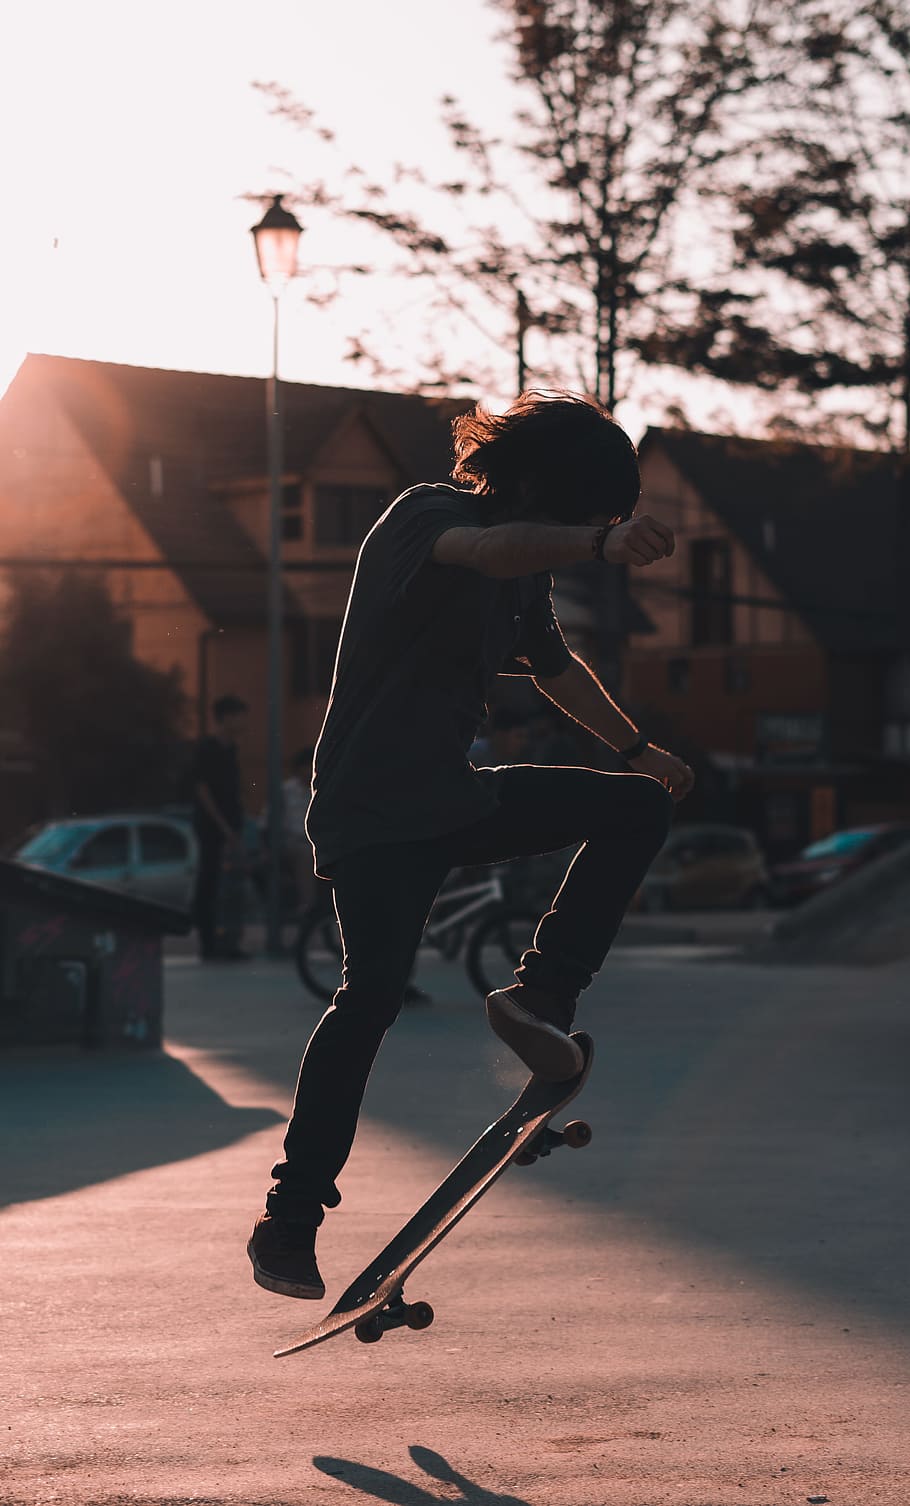 HD wallpaper: man doing skateboard trick during daytime